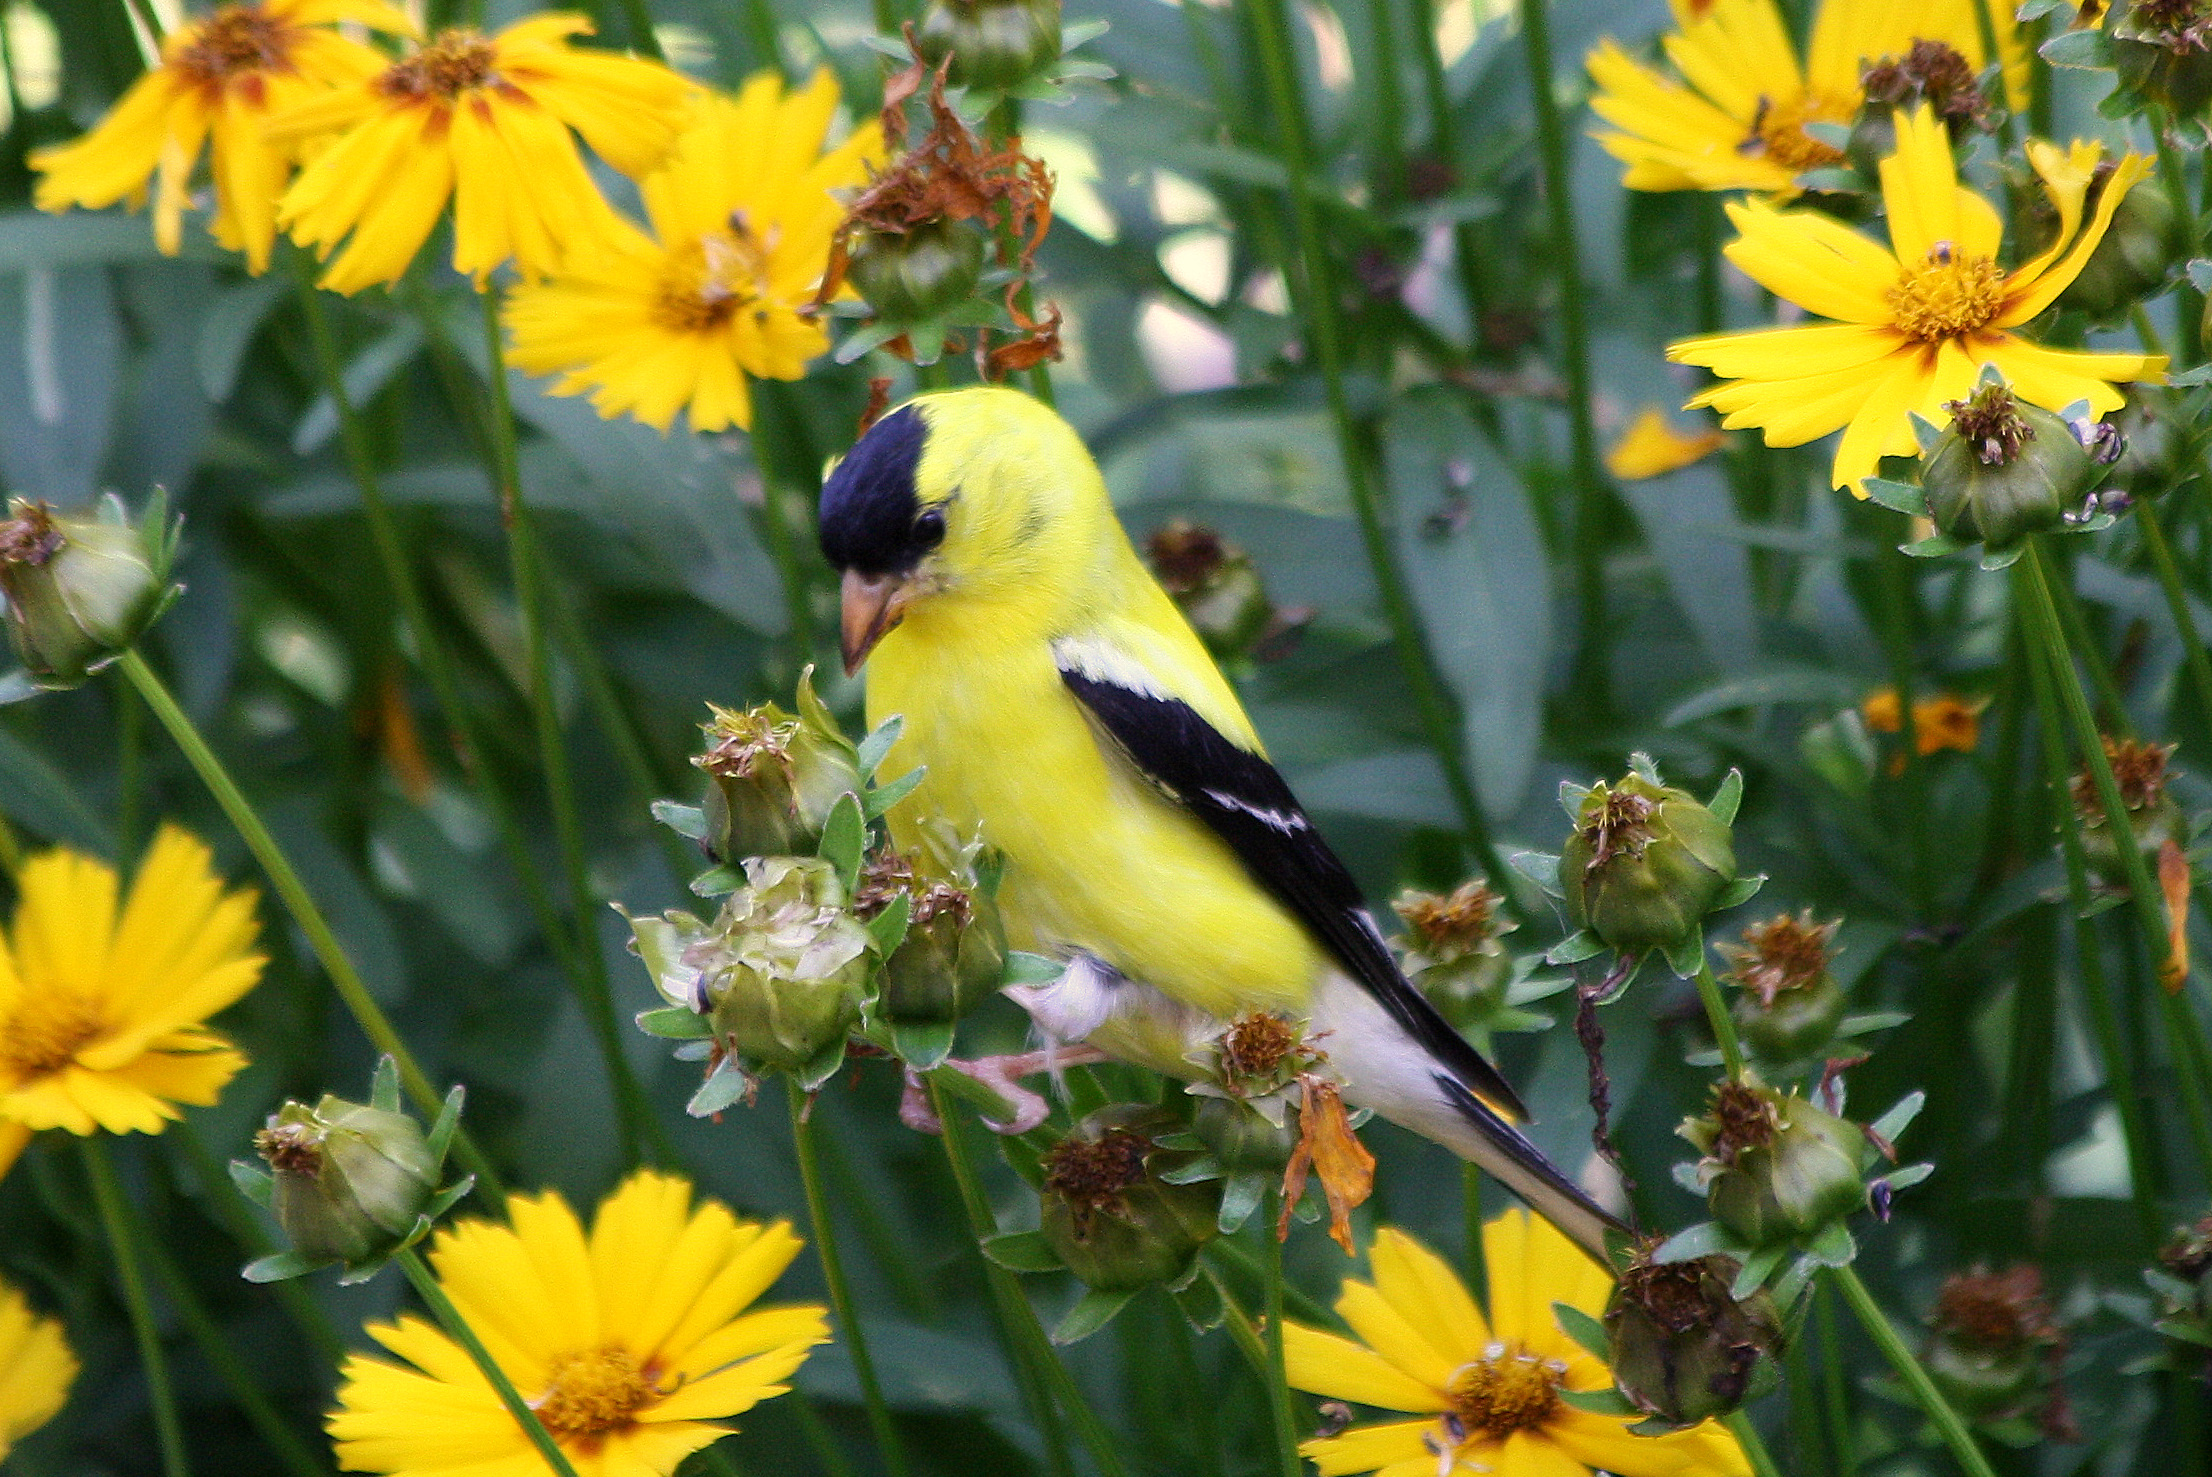 American Goldfinch in flowers